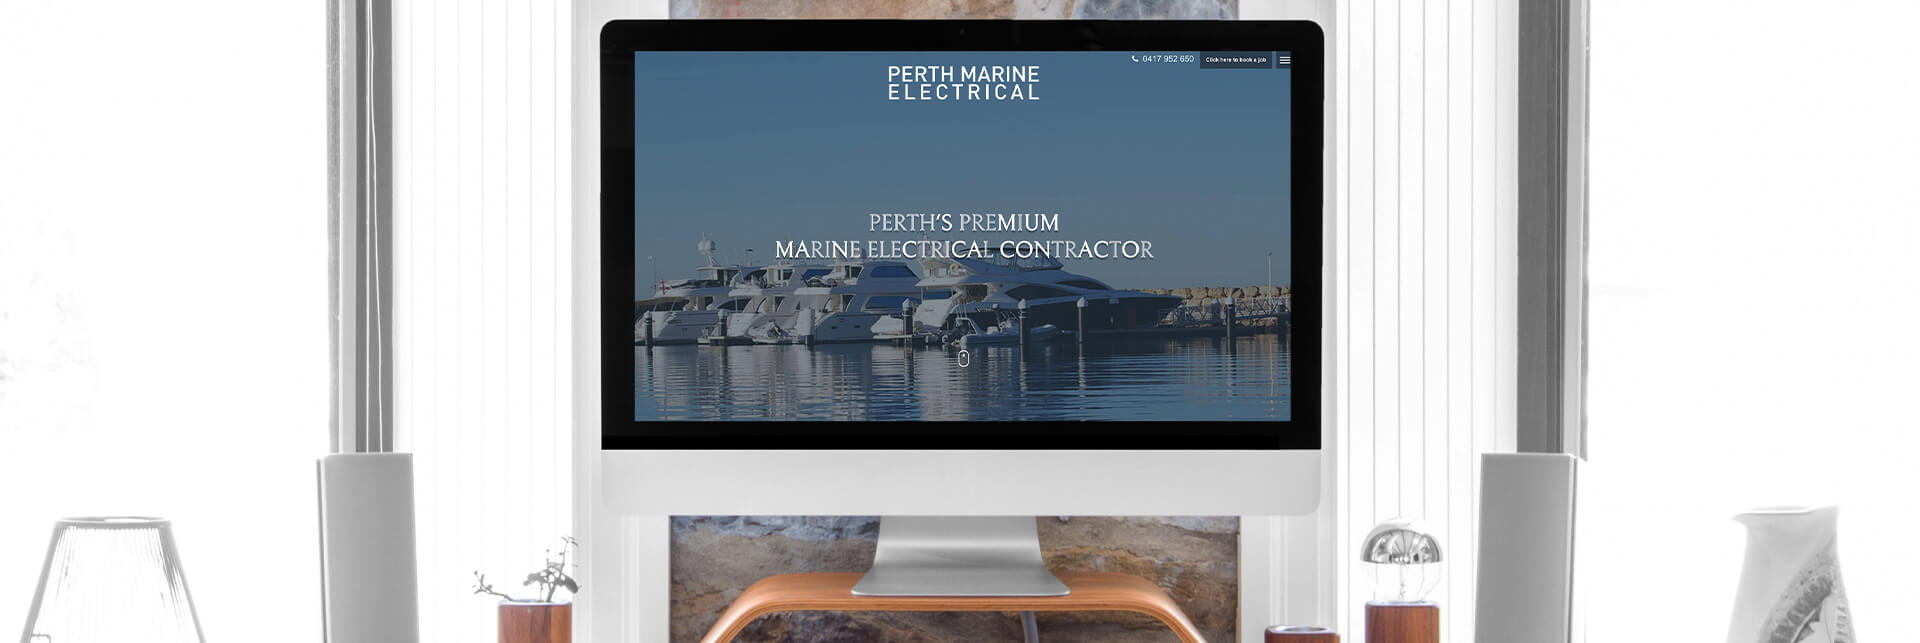 perth marine electrical desktop mockup